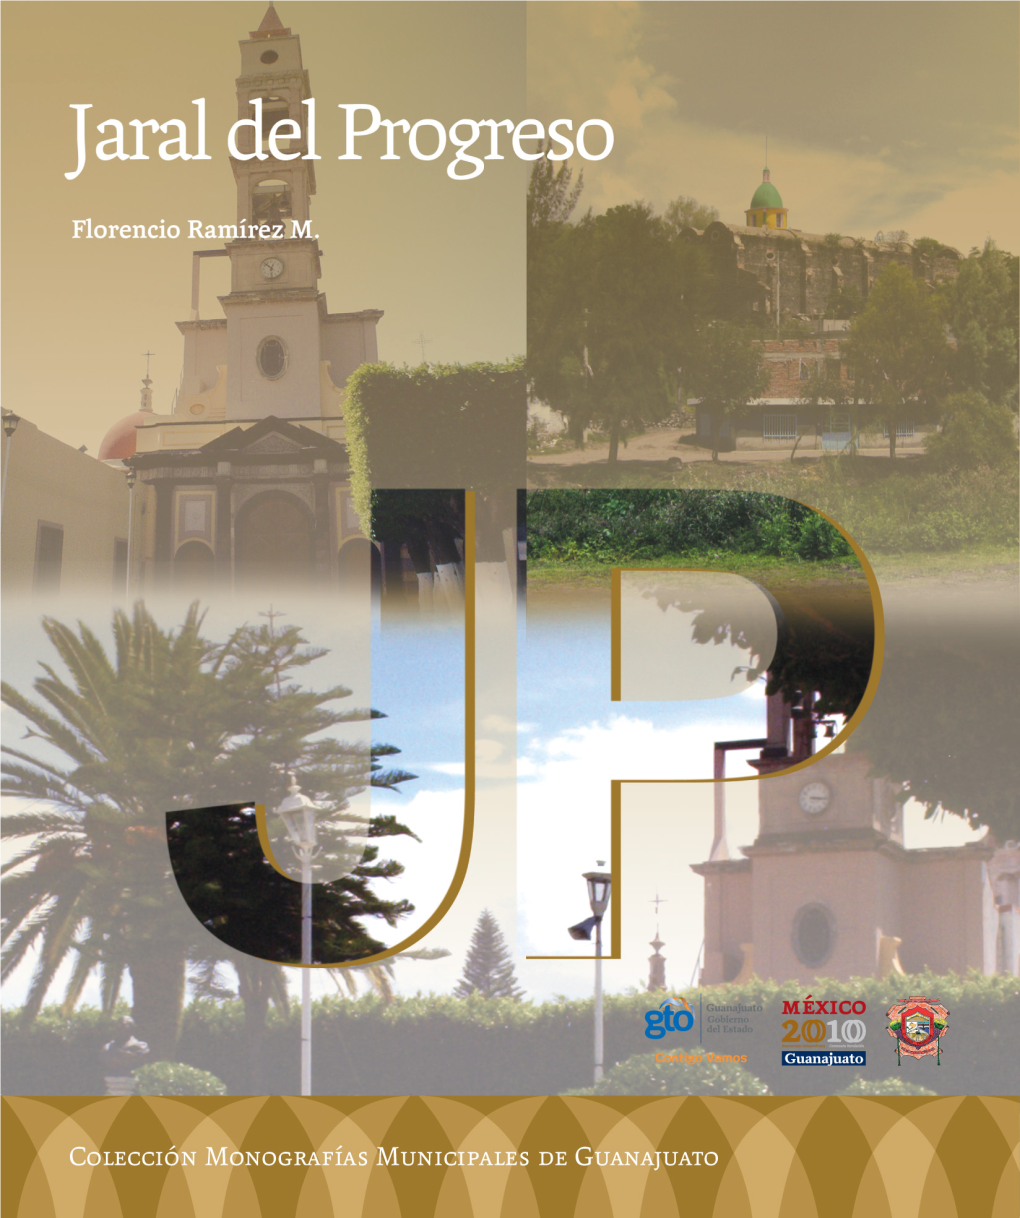 2010 CEOCB Monografia Jaral Del Progreso.Pdf